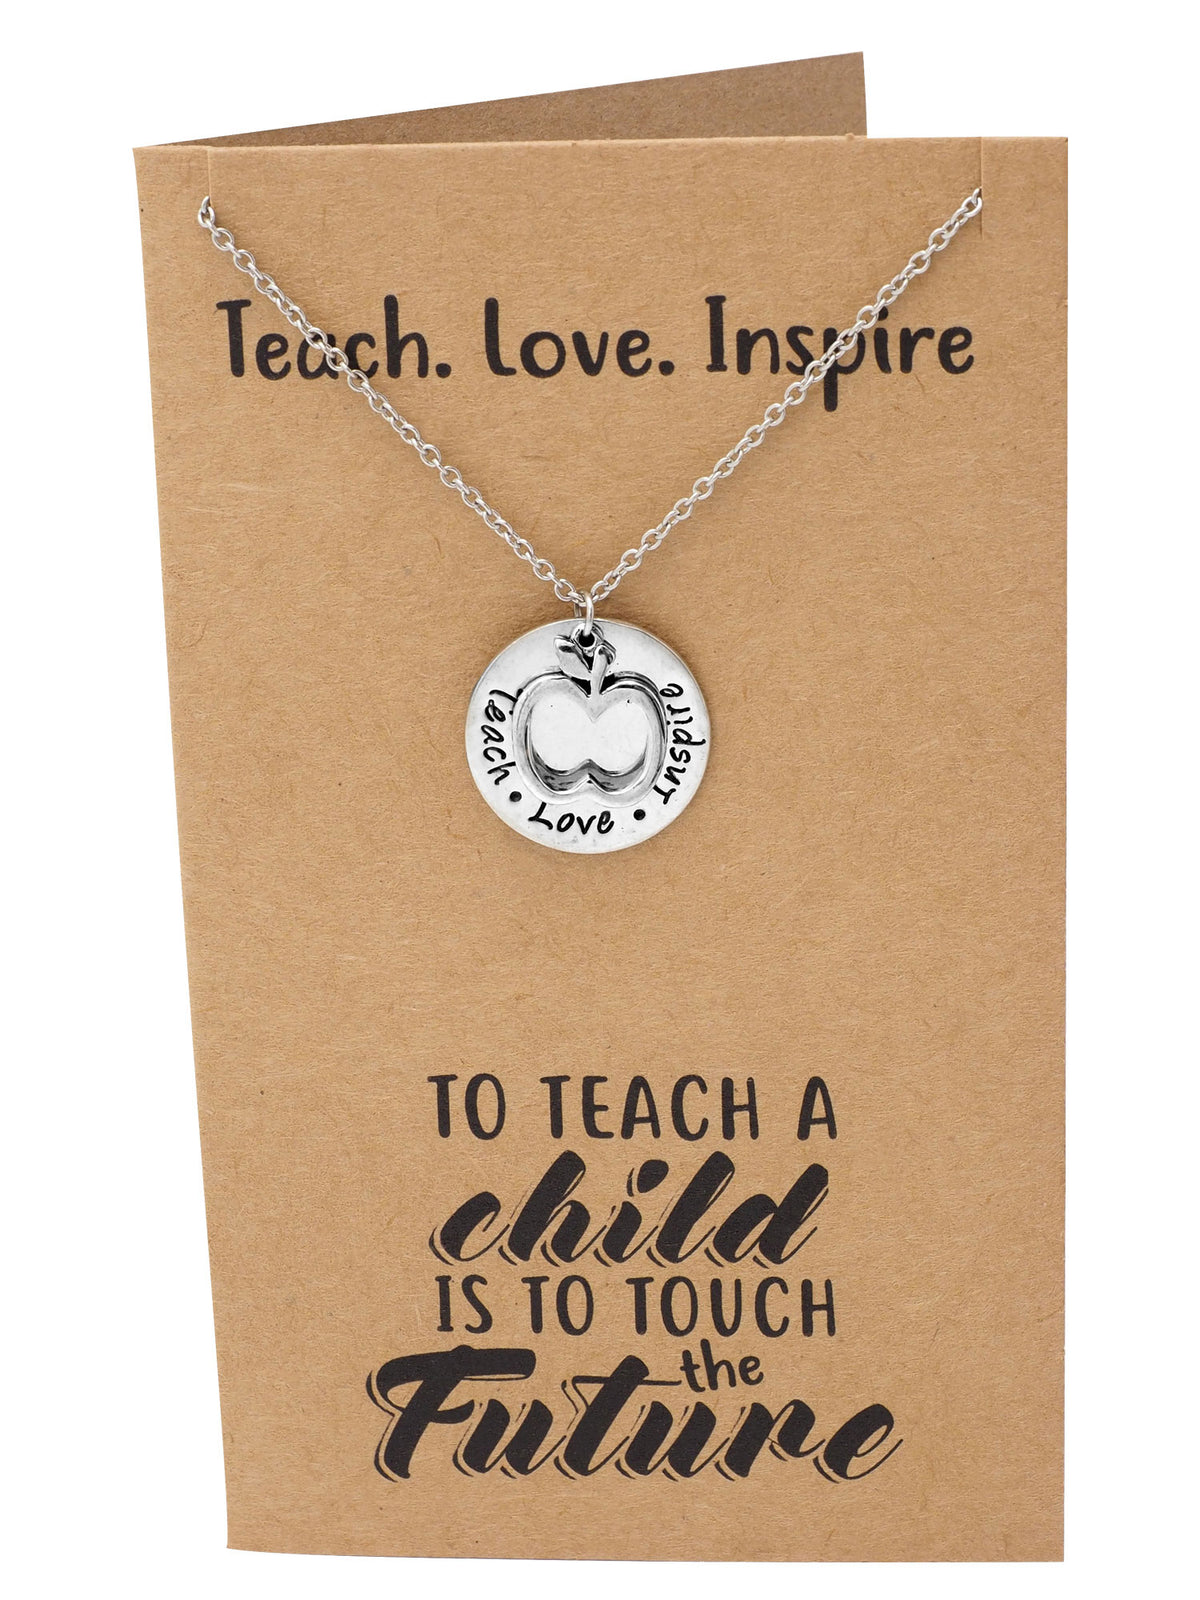 Zuri Gifts for Teachers - Teach Love Inspire Necklace, Teacher Gifts ...